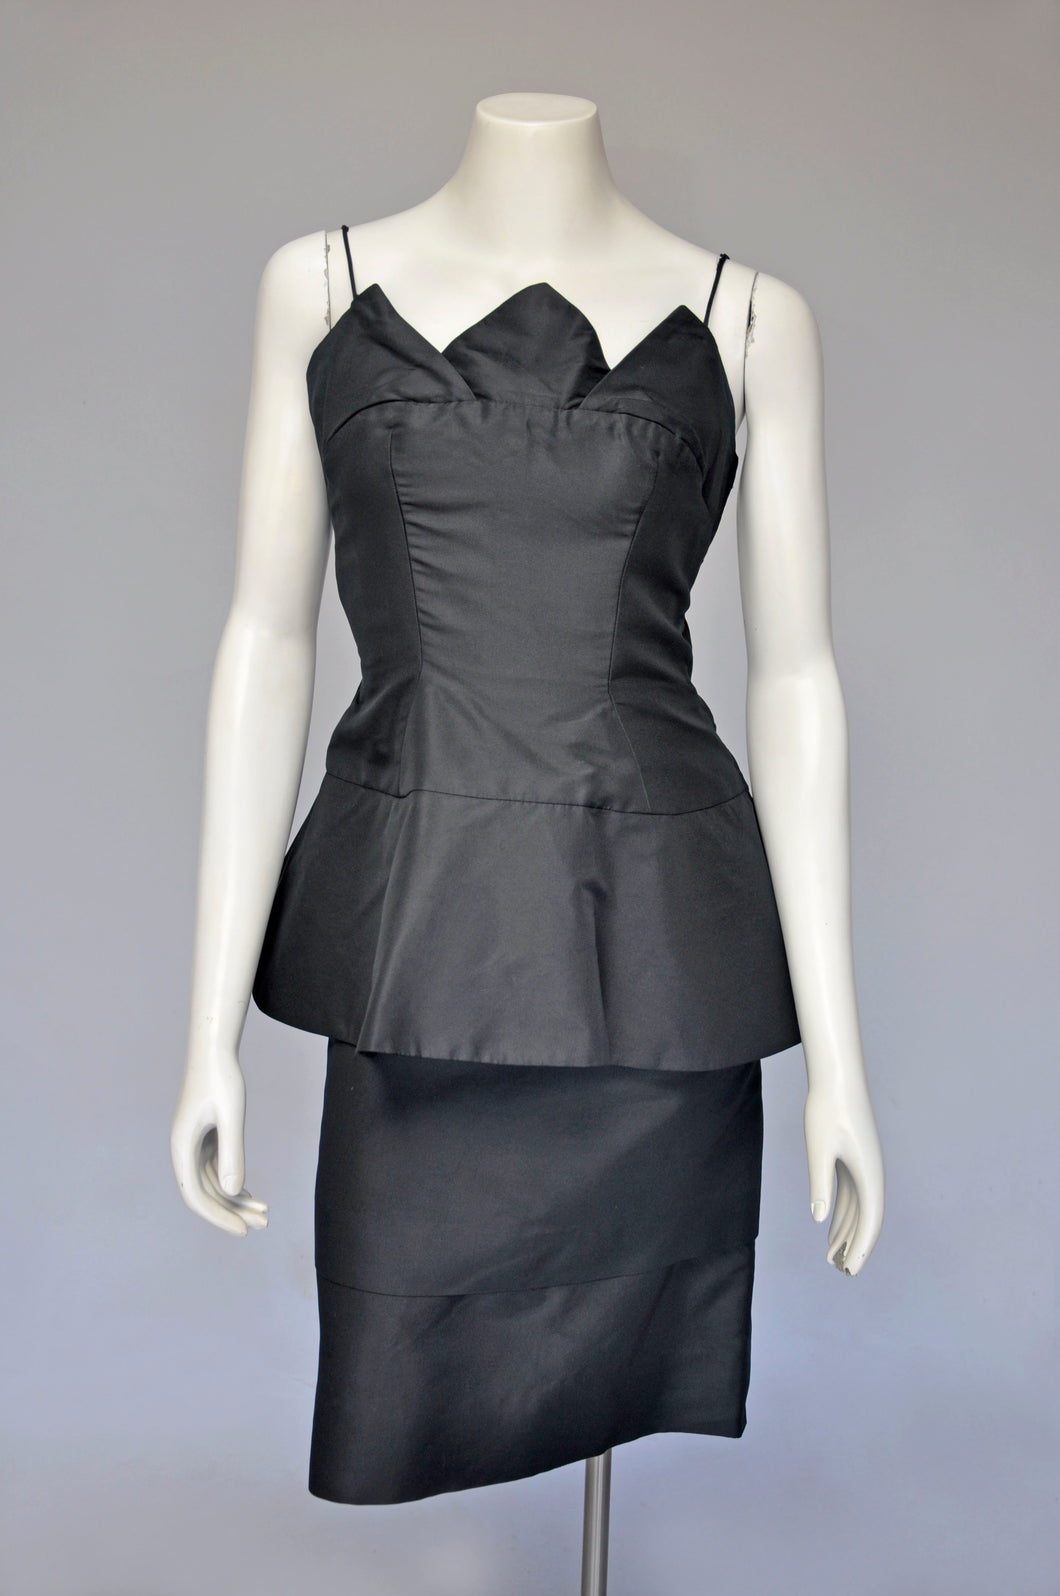 vintage 1950s black cocktail dress with peplum M